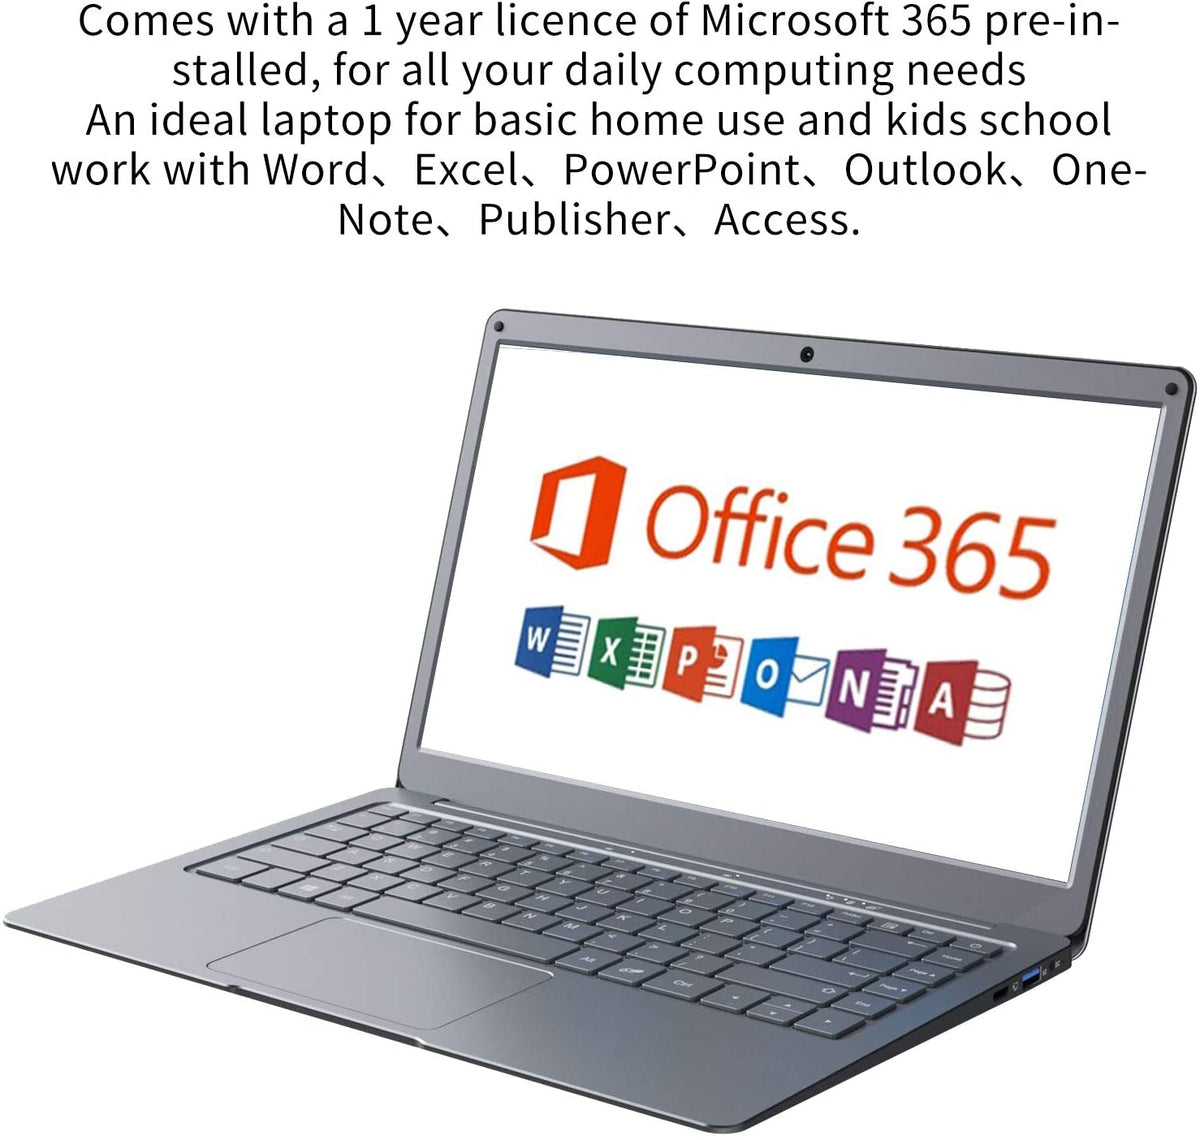 Jumper Portatile Microsoft Office 365 4 GB DDR3 128 GB eMMC Windows 10 Laptop con 13,3 FHD, Intel CPU, Dual Band, Bluetooth 4.2, Notebook SSD da 1 TB e 256 GB TF per l'espansione